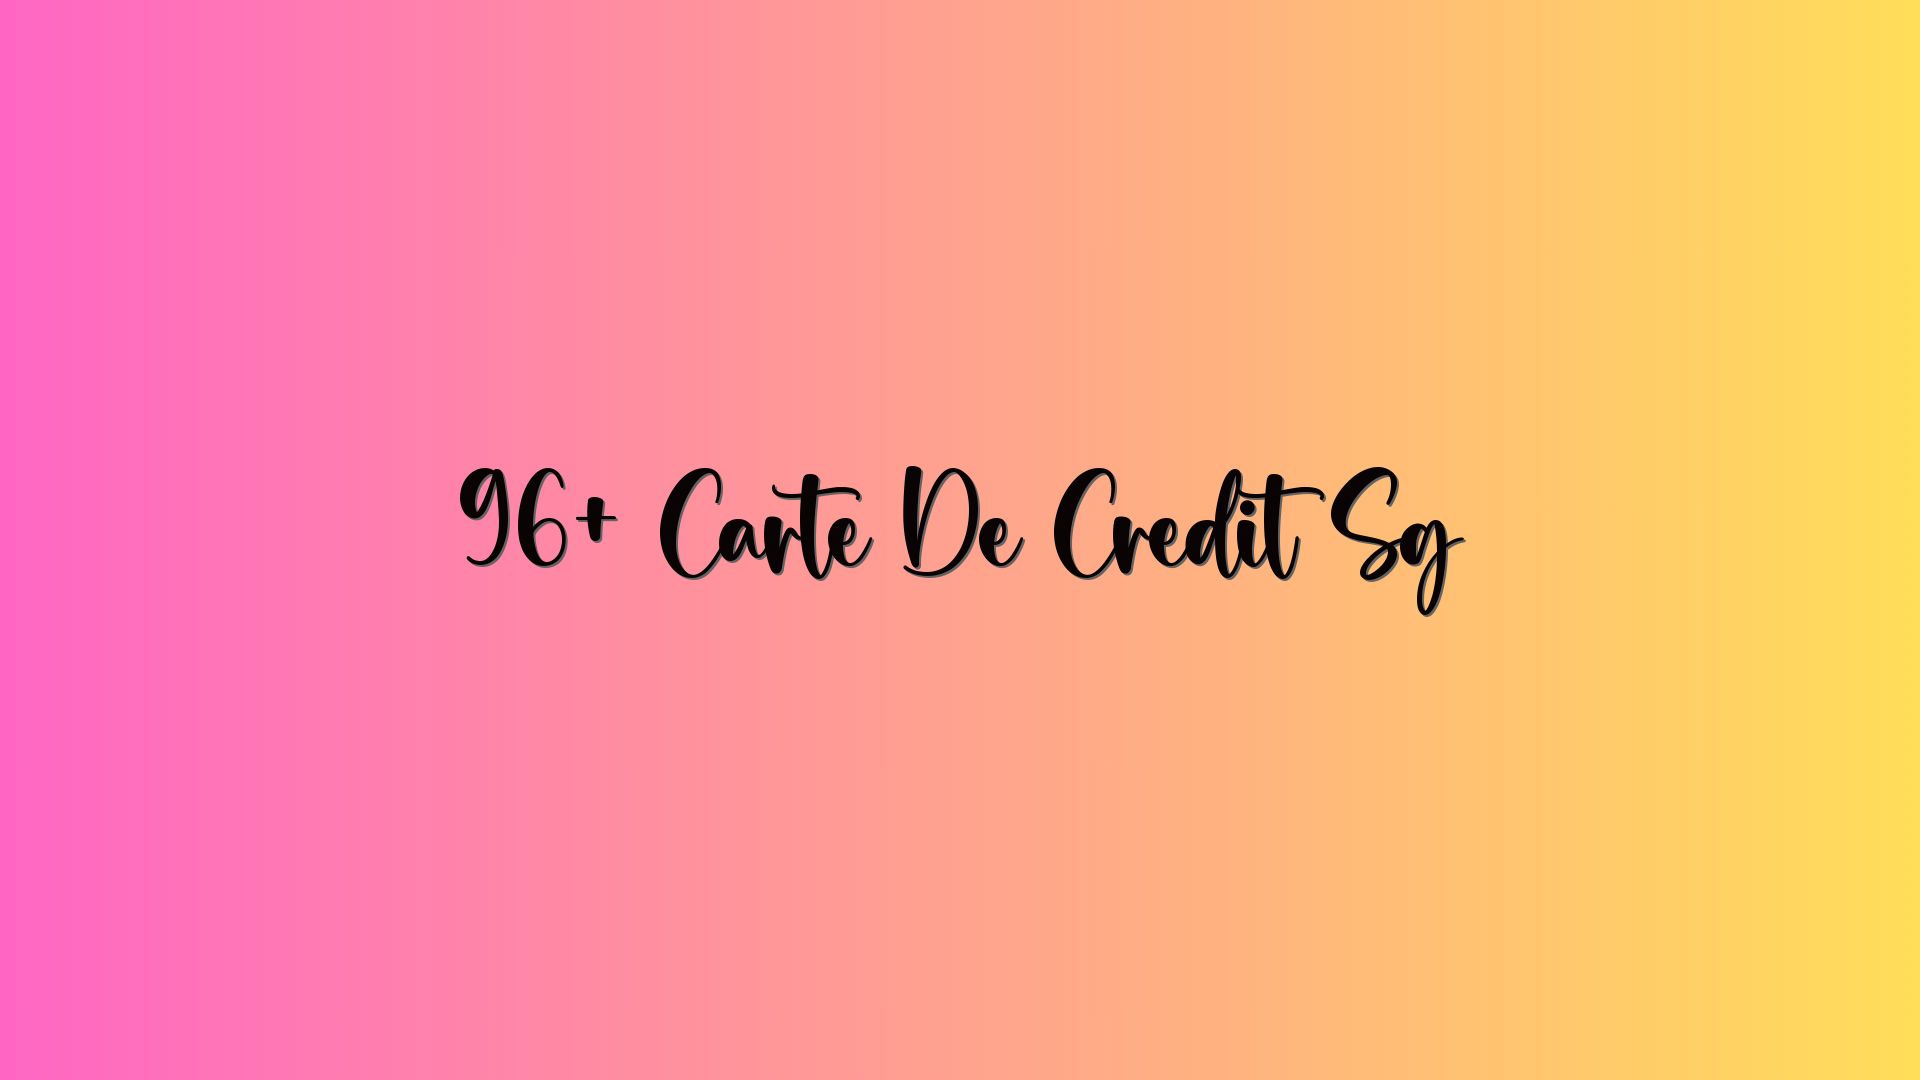 96+ Carte De Credit Sg